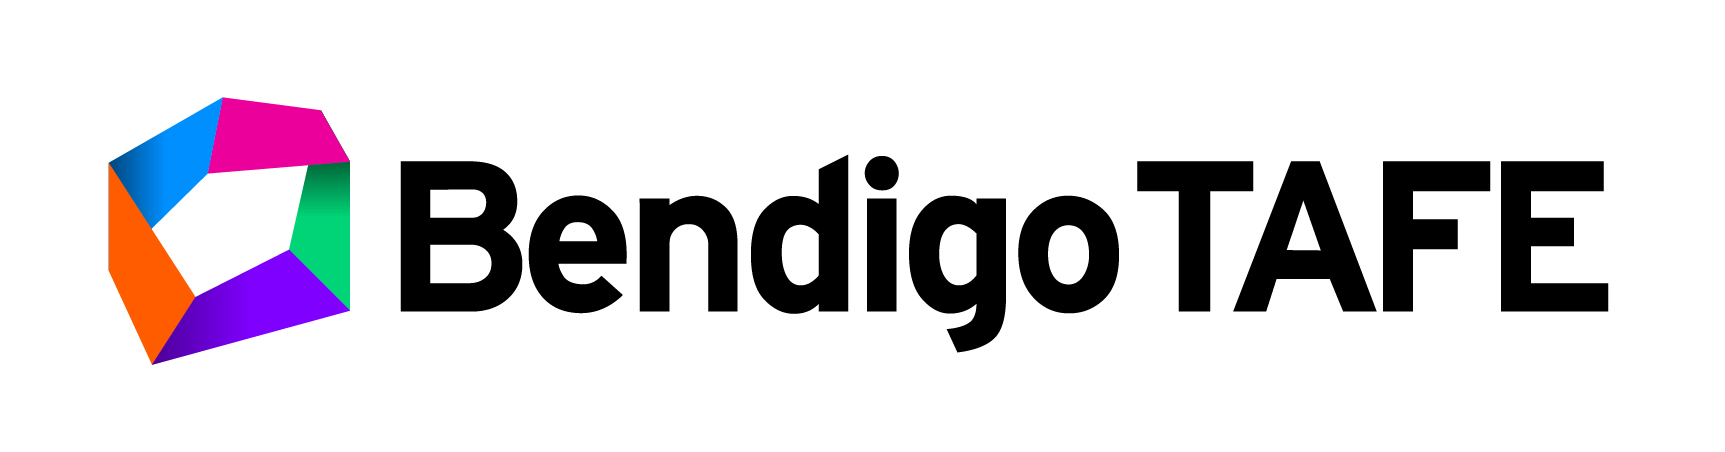 BendigoTAFE-Logo-Horizontal-CMYK.jpg